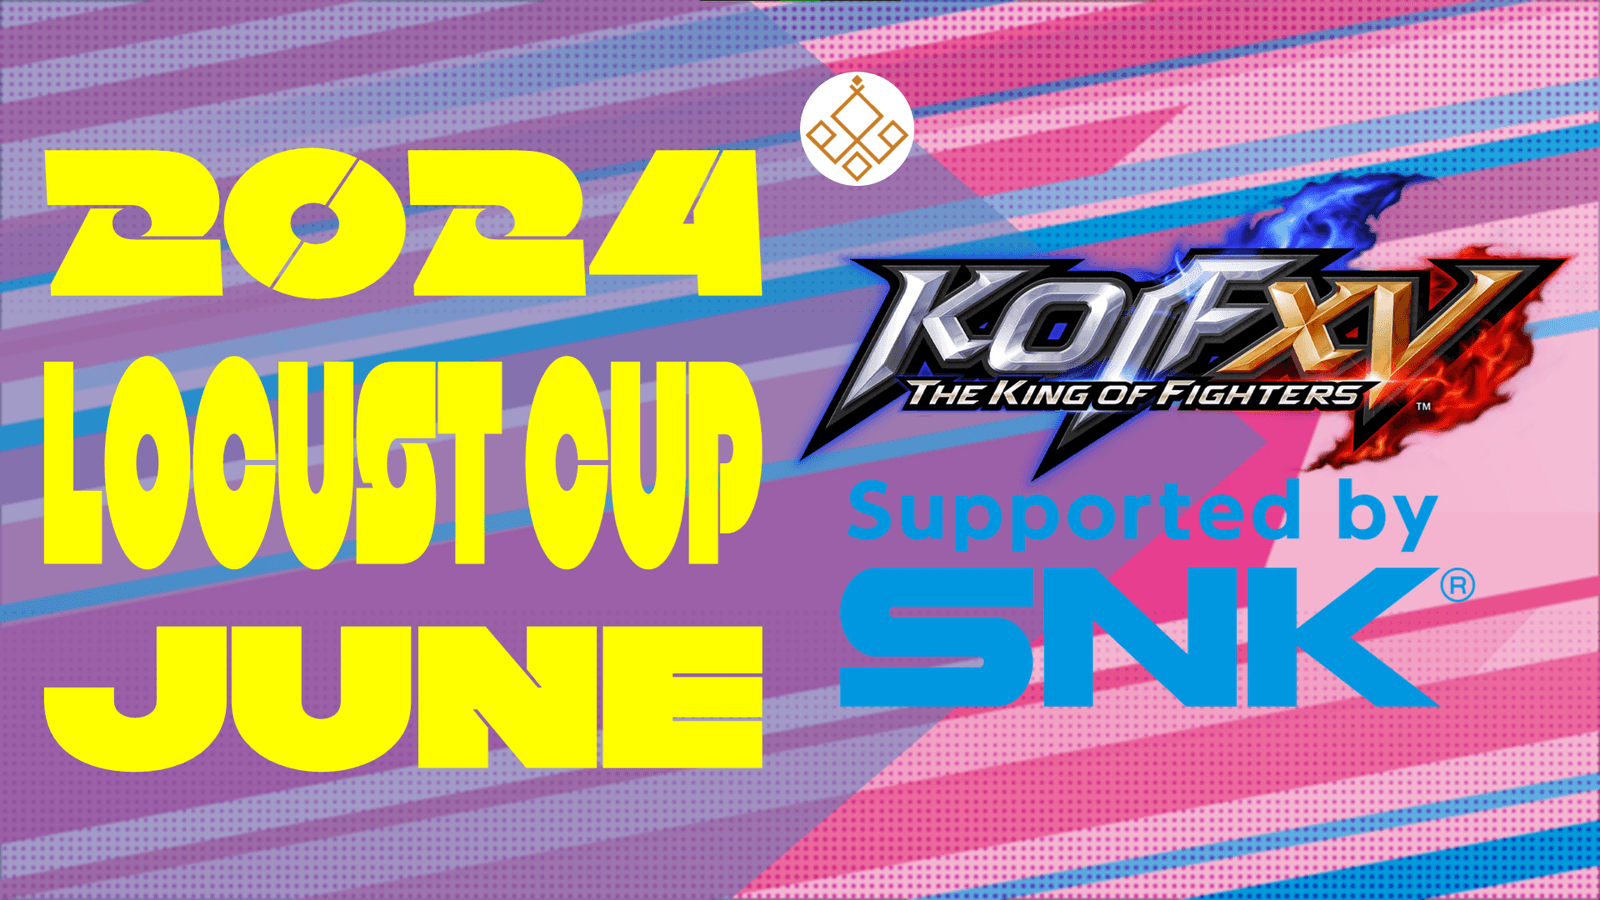 Locust杯 -KOF15 6月期-【2024】の見出し画像